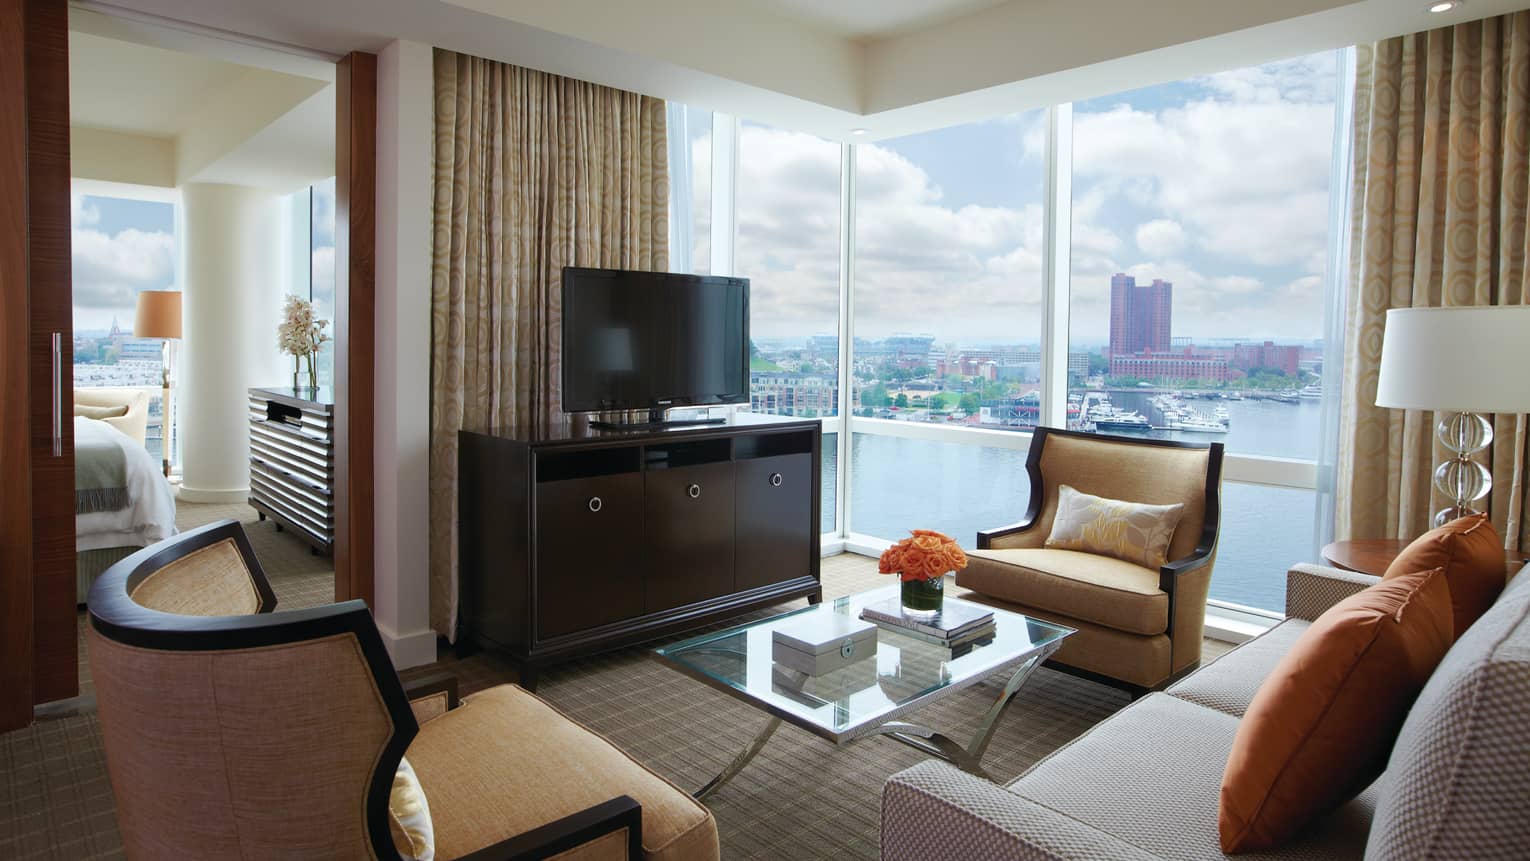 Executive Suite living room sofas, armchairs, TV by bedroom door, window with harbour view